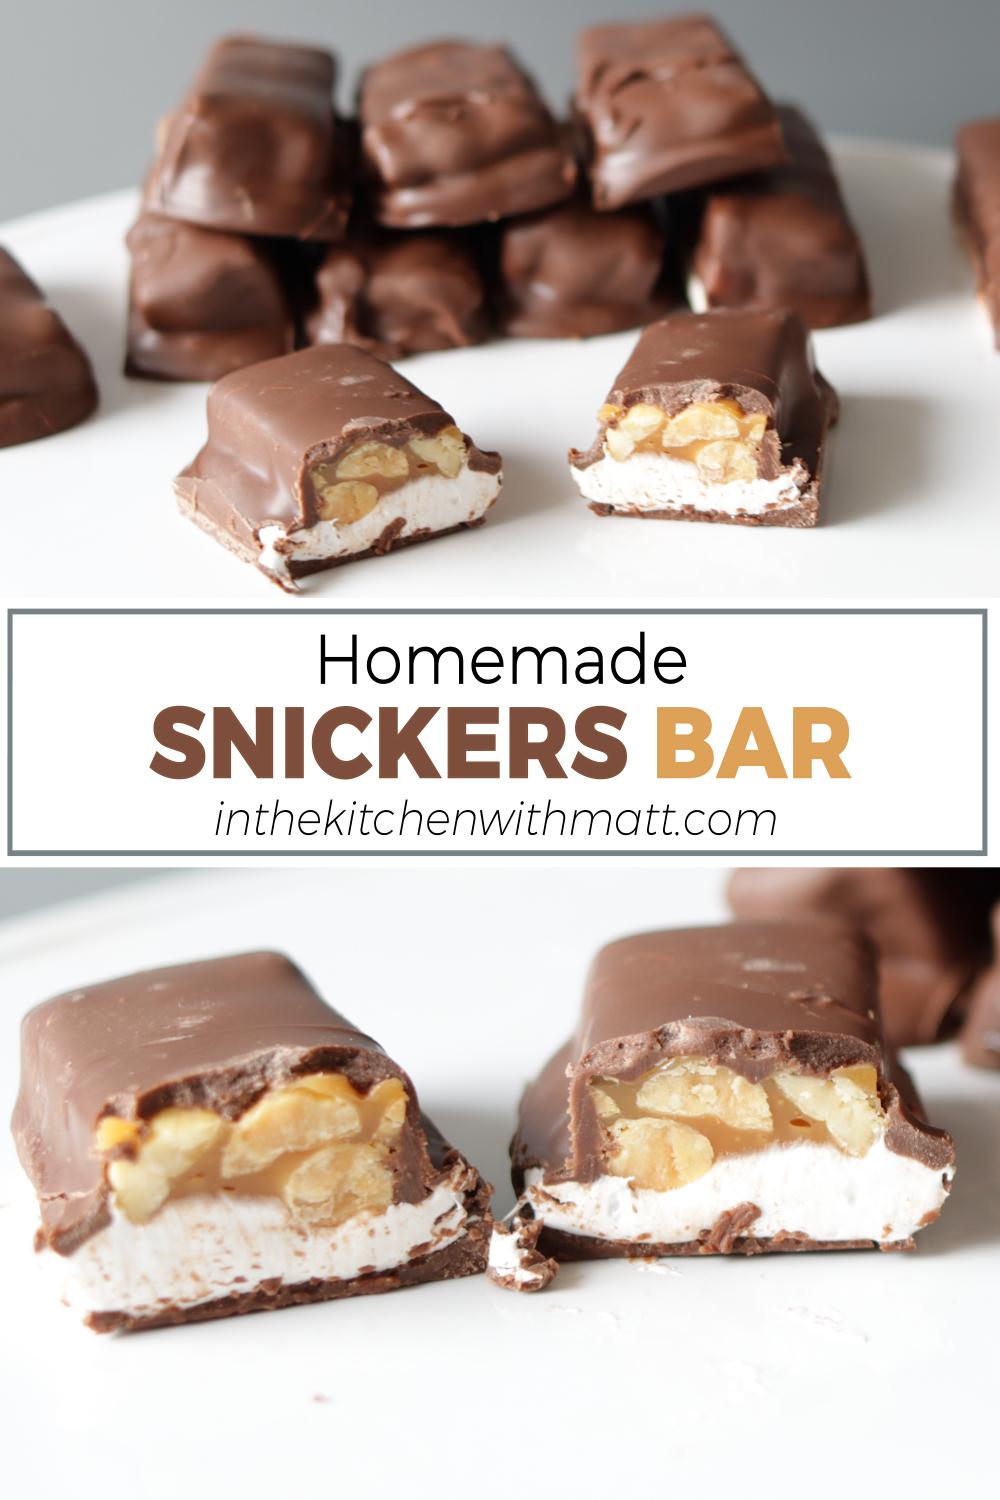 Homemade Snickers Bar Pin Hi Res.jpg